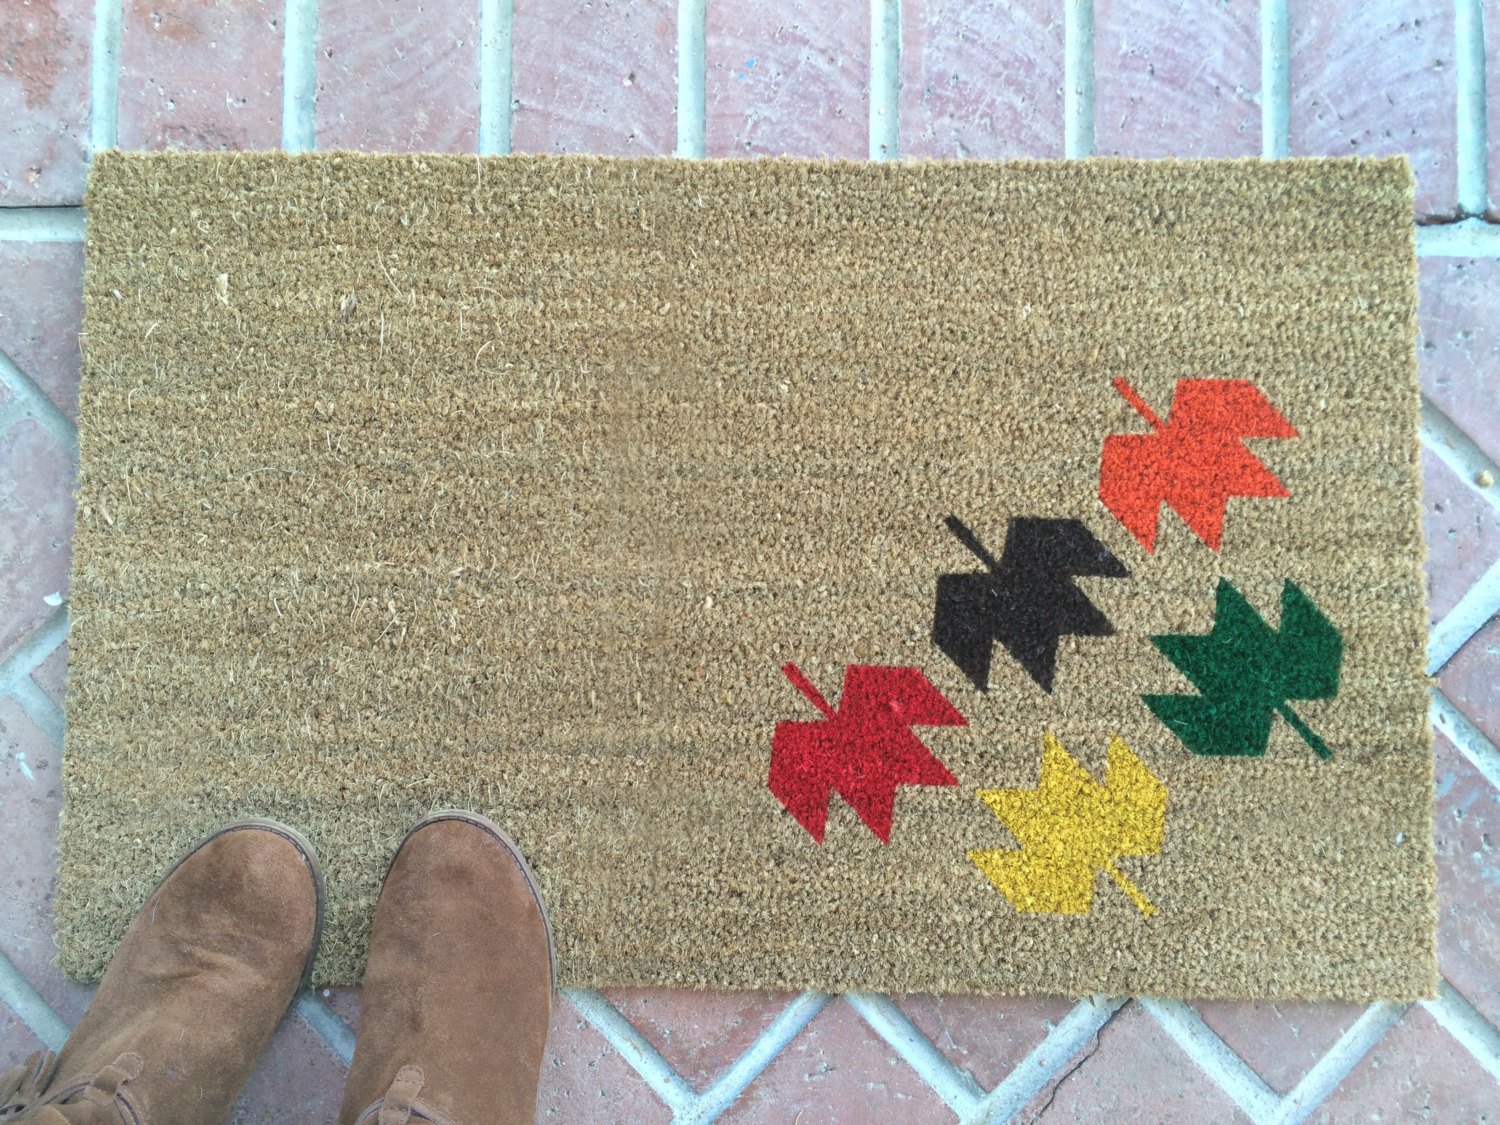 Modern Fall Leaves Outdoor Doormat